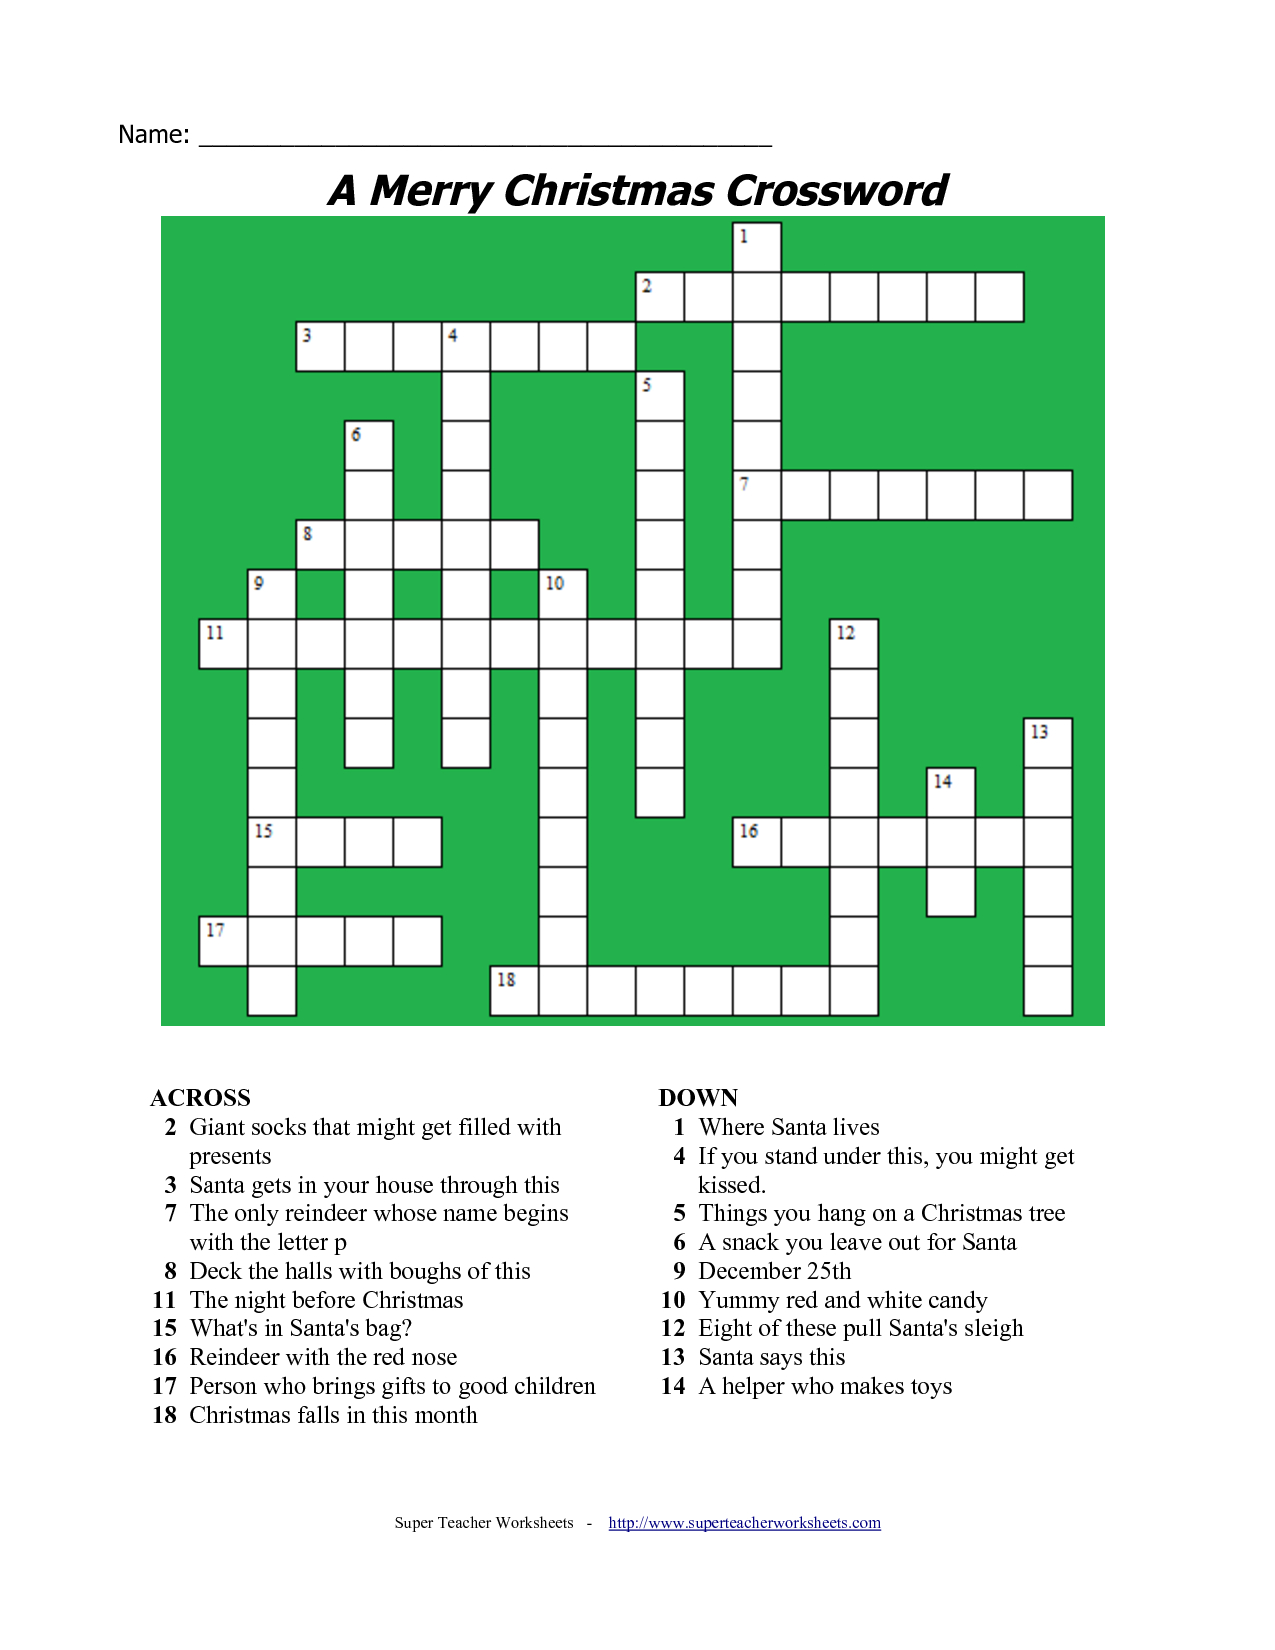 20 Fun Printable Christmas Crossword Puzzles | Kittybabylove - Printable Xmas Crossword Puzzles